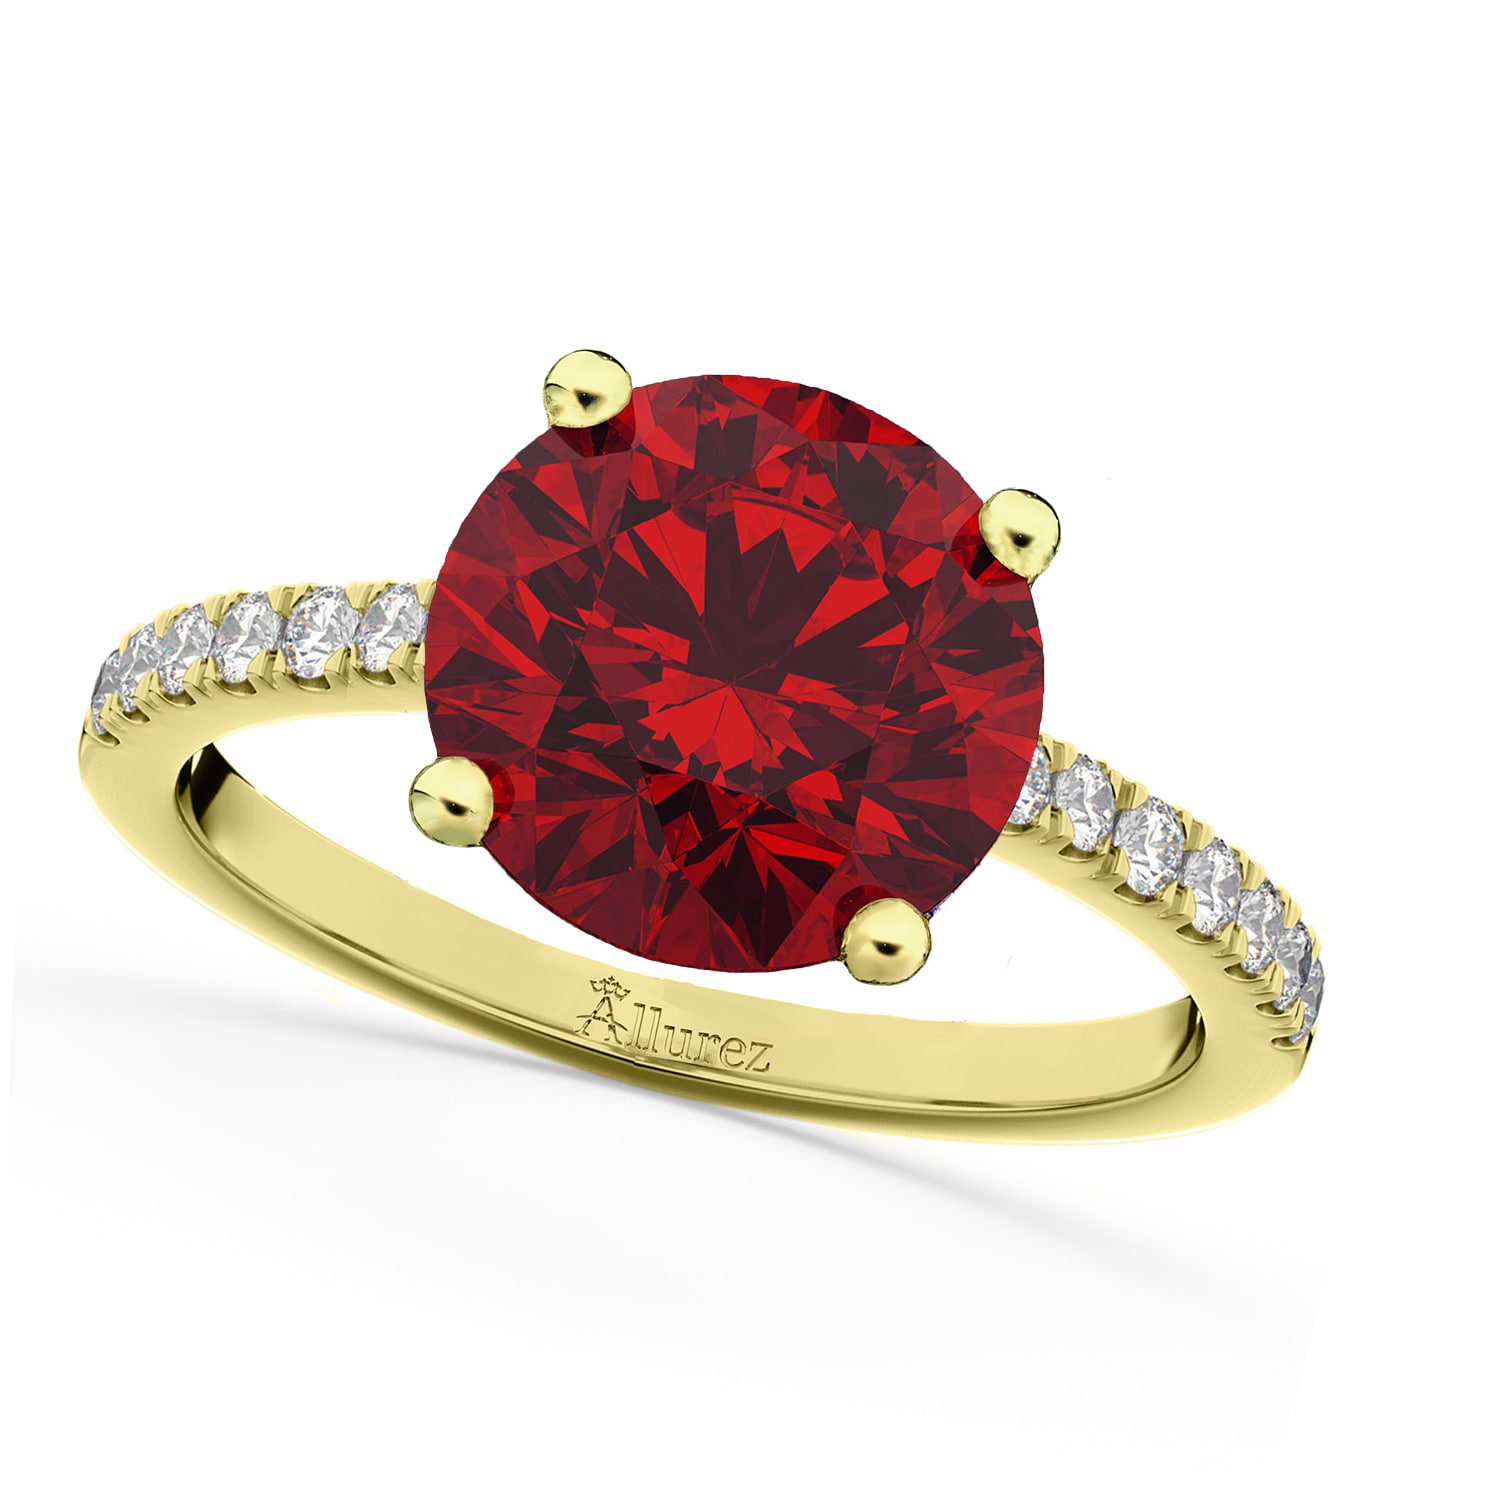 Ruby & Diamond Engagement Ring 14K Yellow Gold 2.51ct